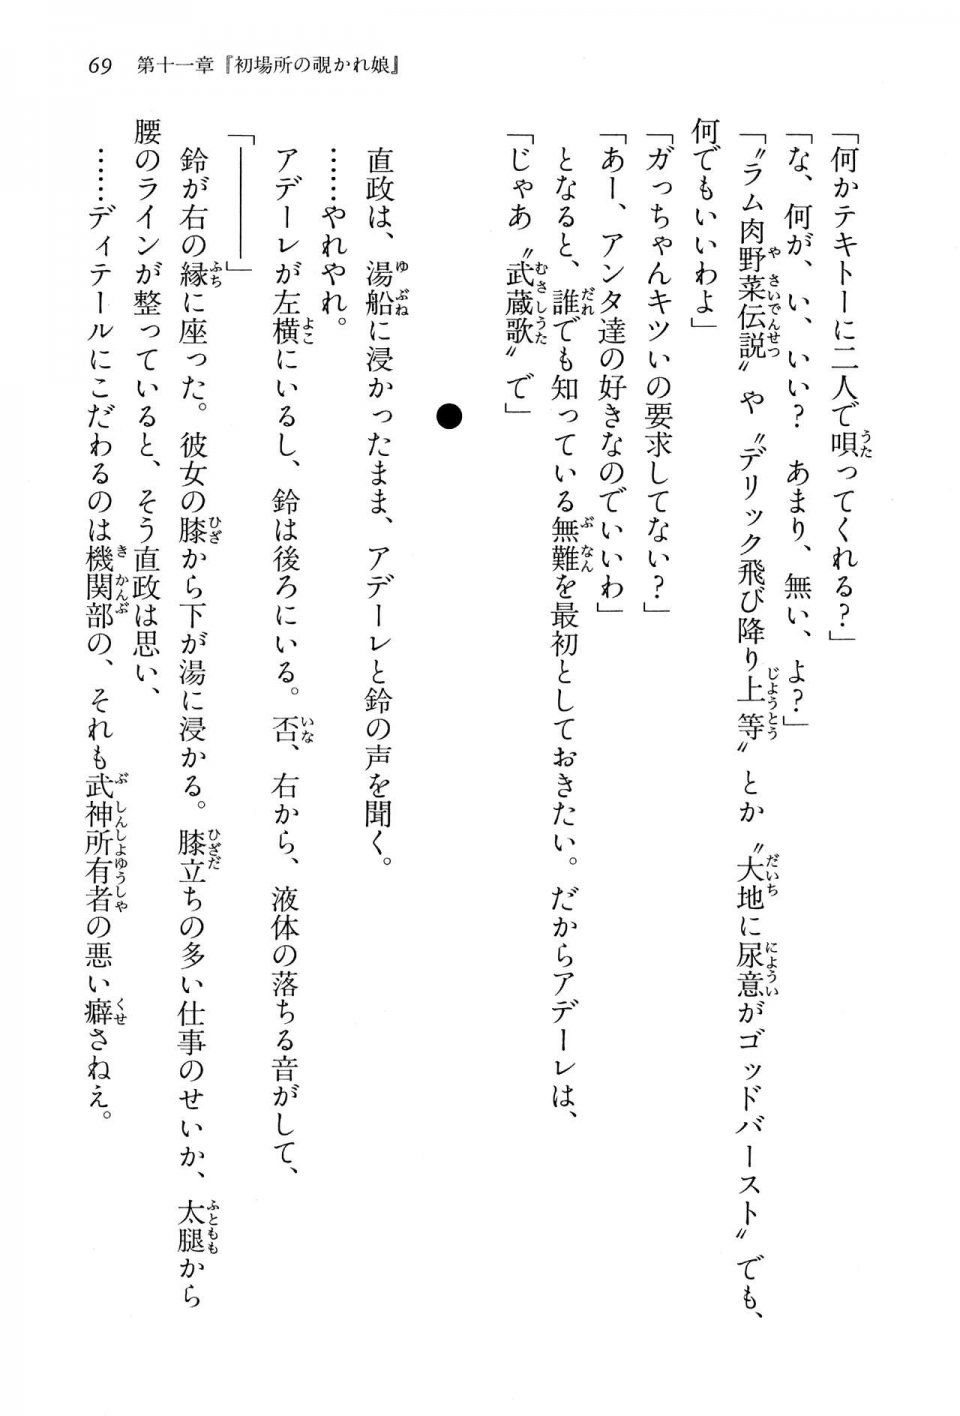 Kyoukai Senjou no Horizon BD Special Mininovel Vol 3(2A) - Photo #73